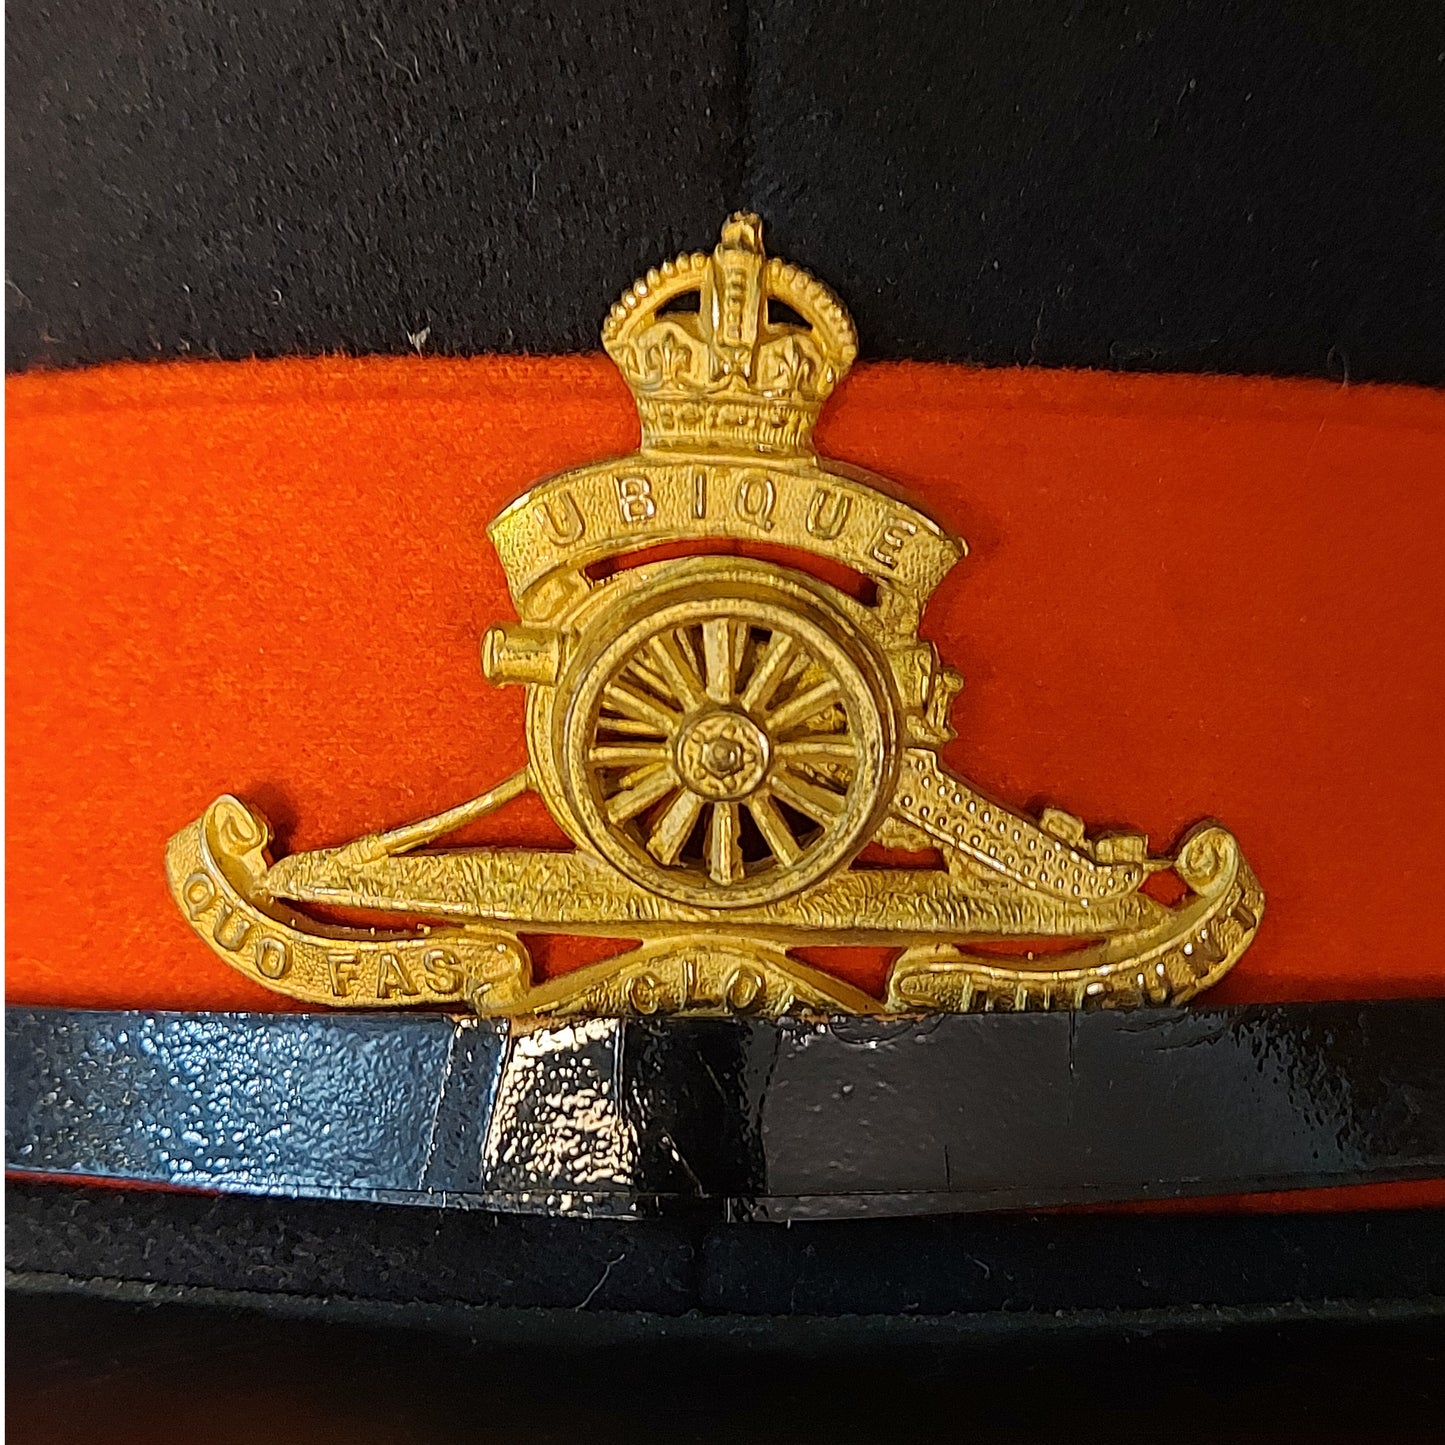 WW2 RCA Royal Canadian Artillery Officer's Visor Cap With Badge